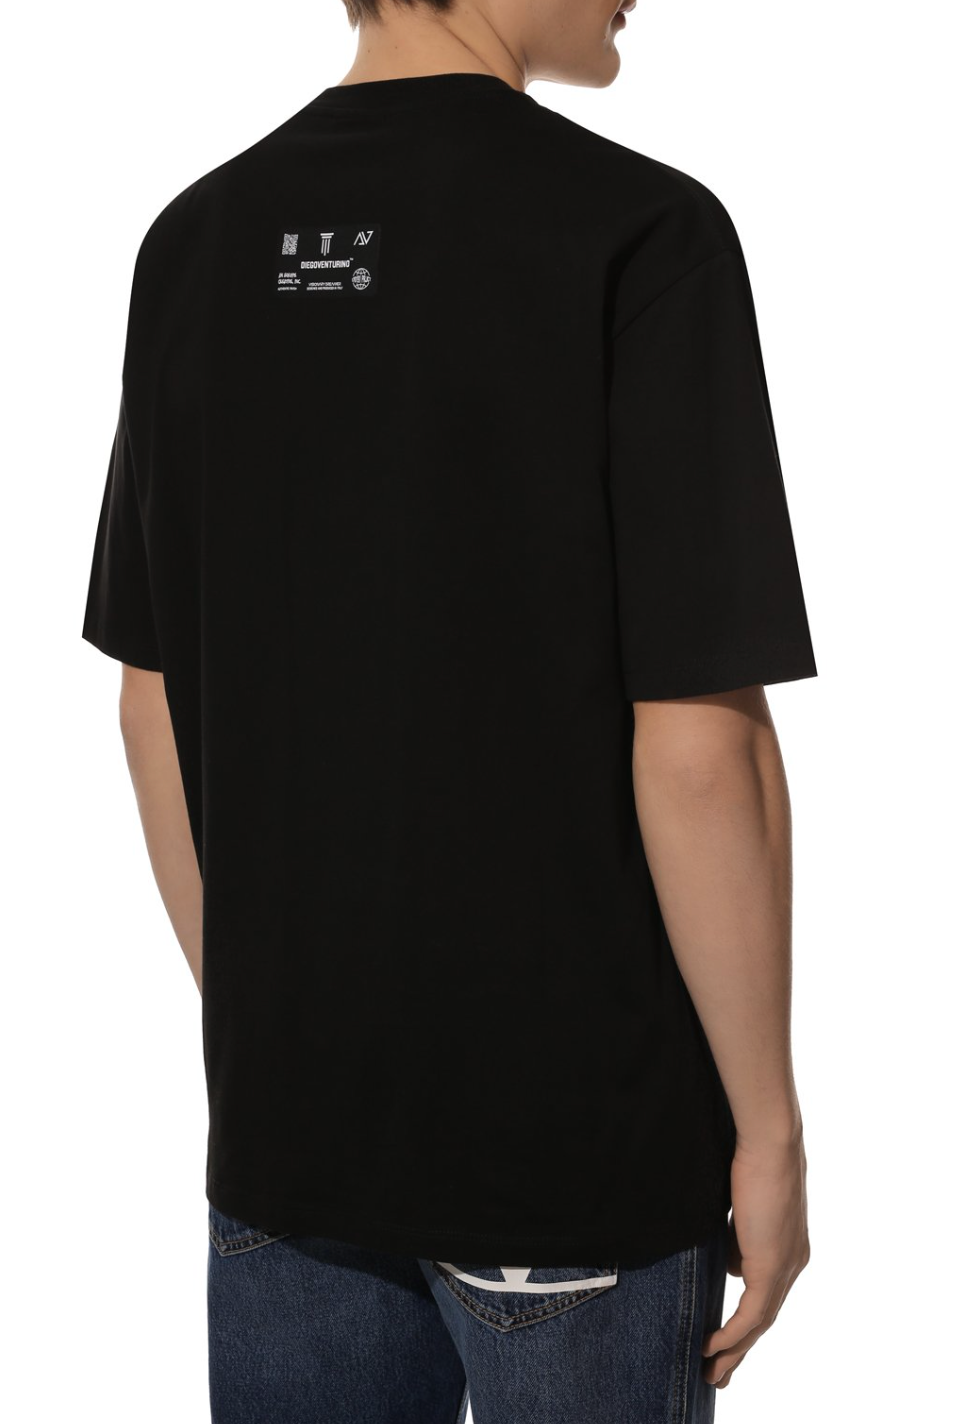 Diego Venturino Sleek Black Cotton T-Shirt with Signature Design